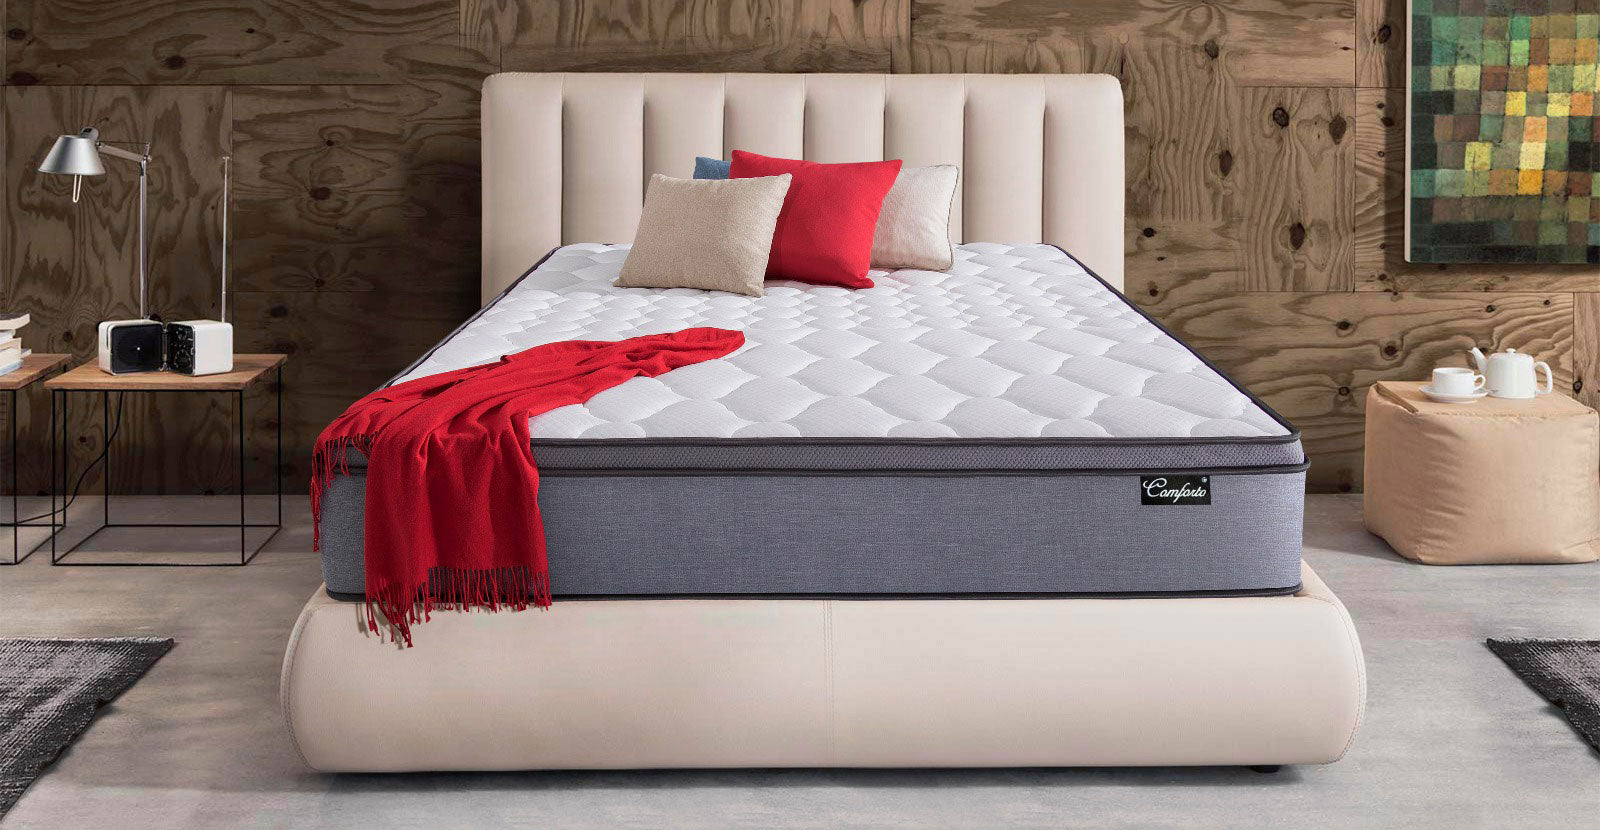 bed mattress online shopping india